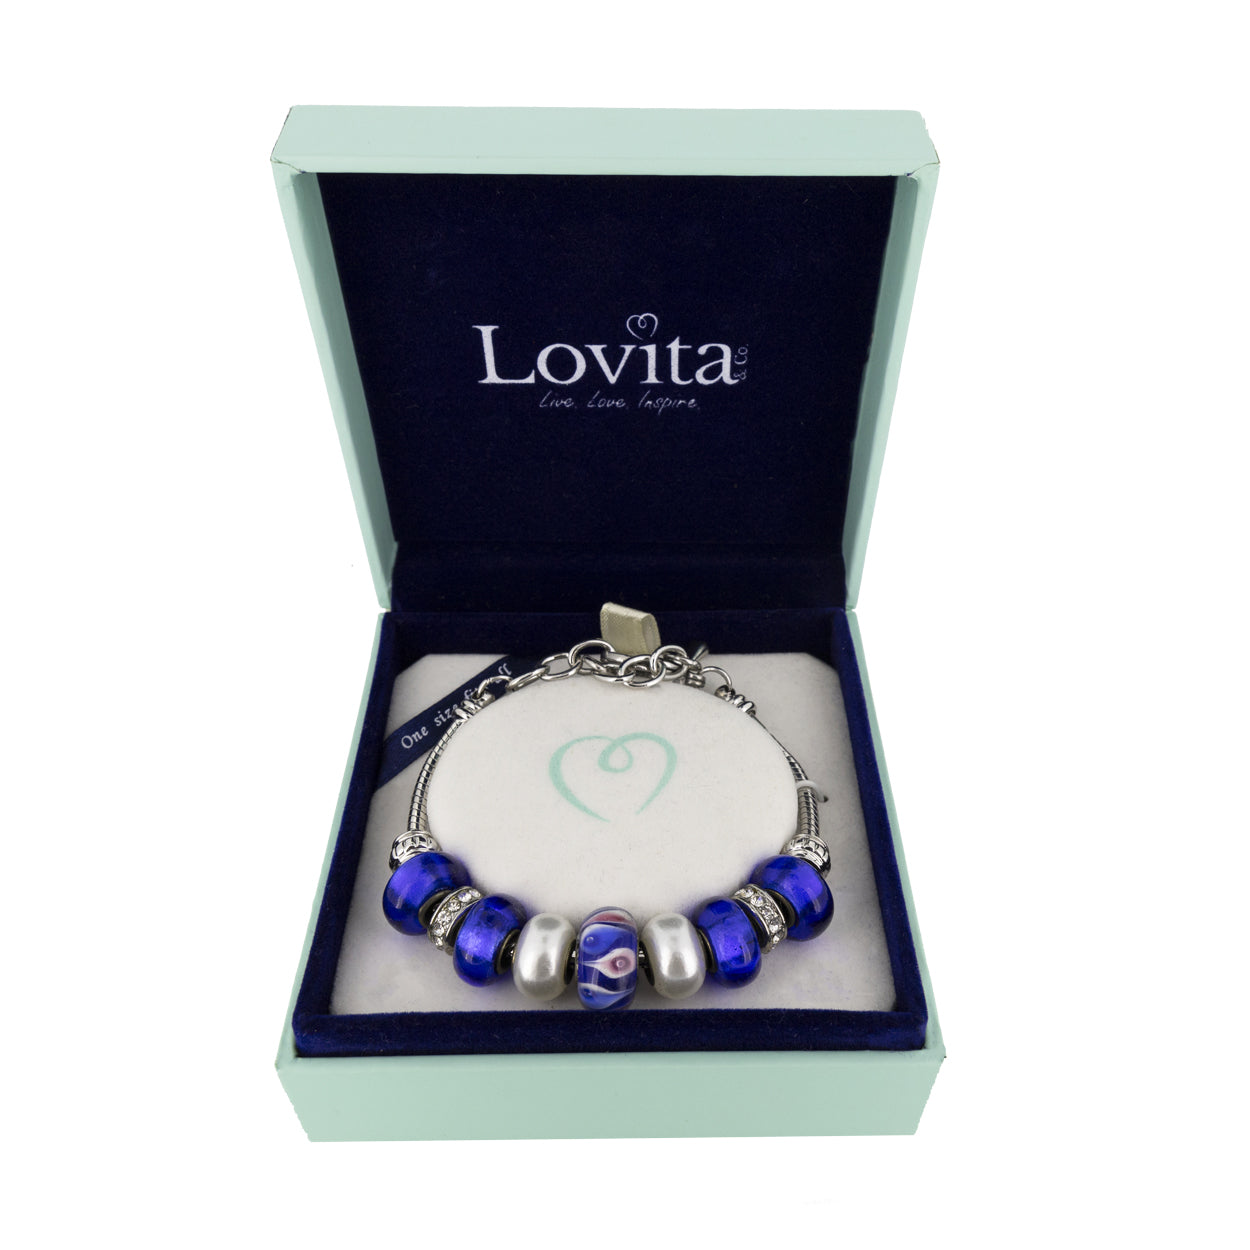 Lovita Charm Bracelett Blue and Silver Charms 